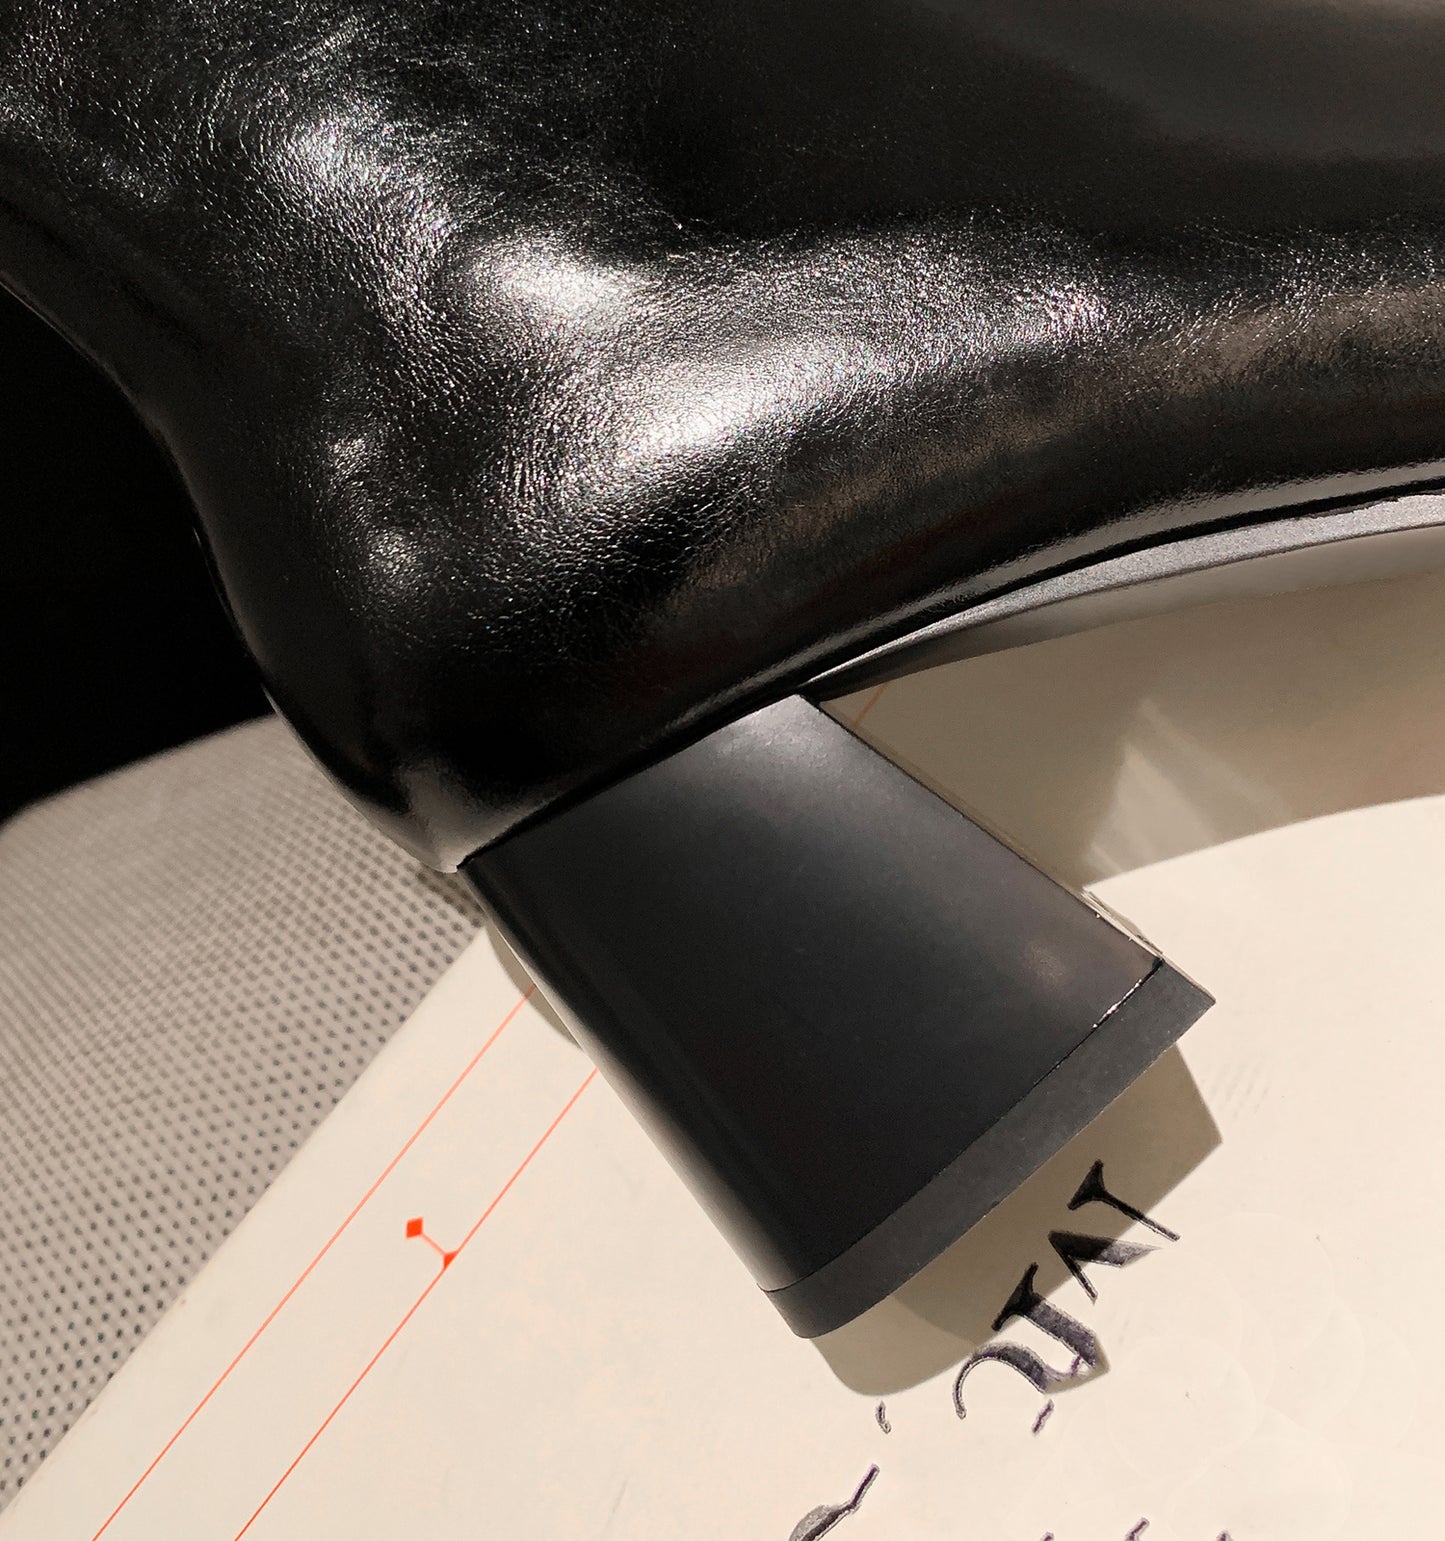 TinaCus Women's Genuine Leather Square Toe Handmade Zipper Mid Chunky Heels Trendy Mid Calf Boots